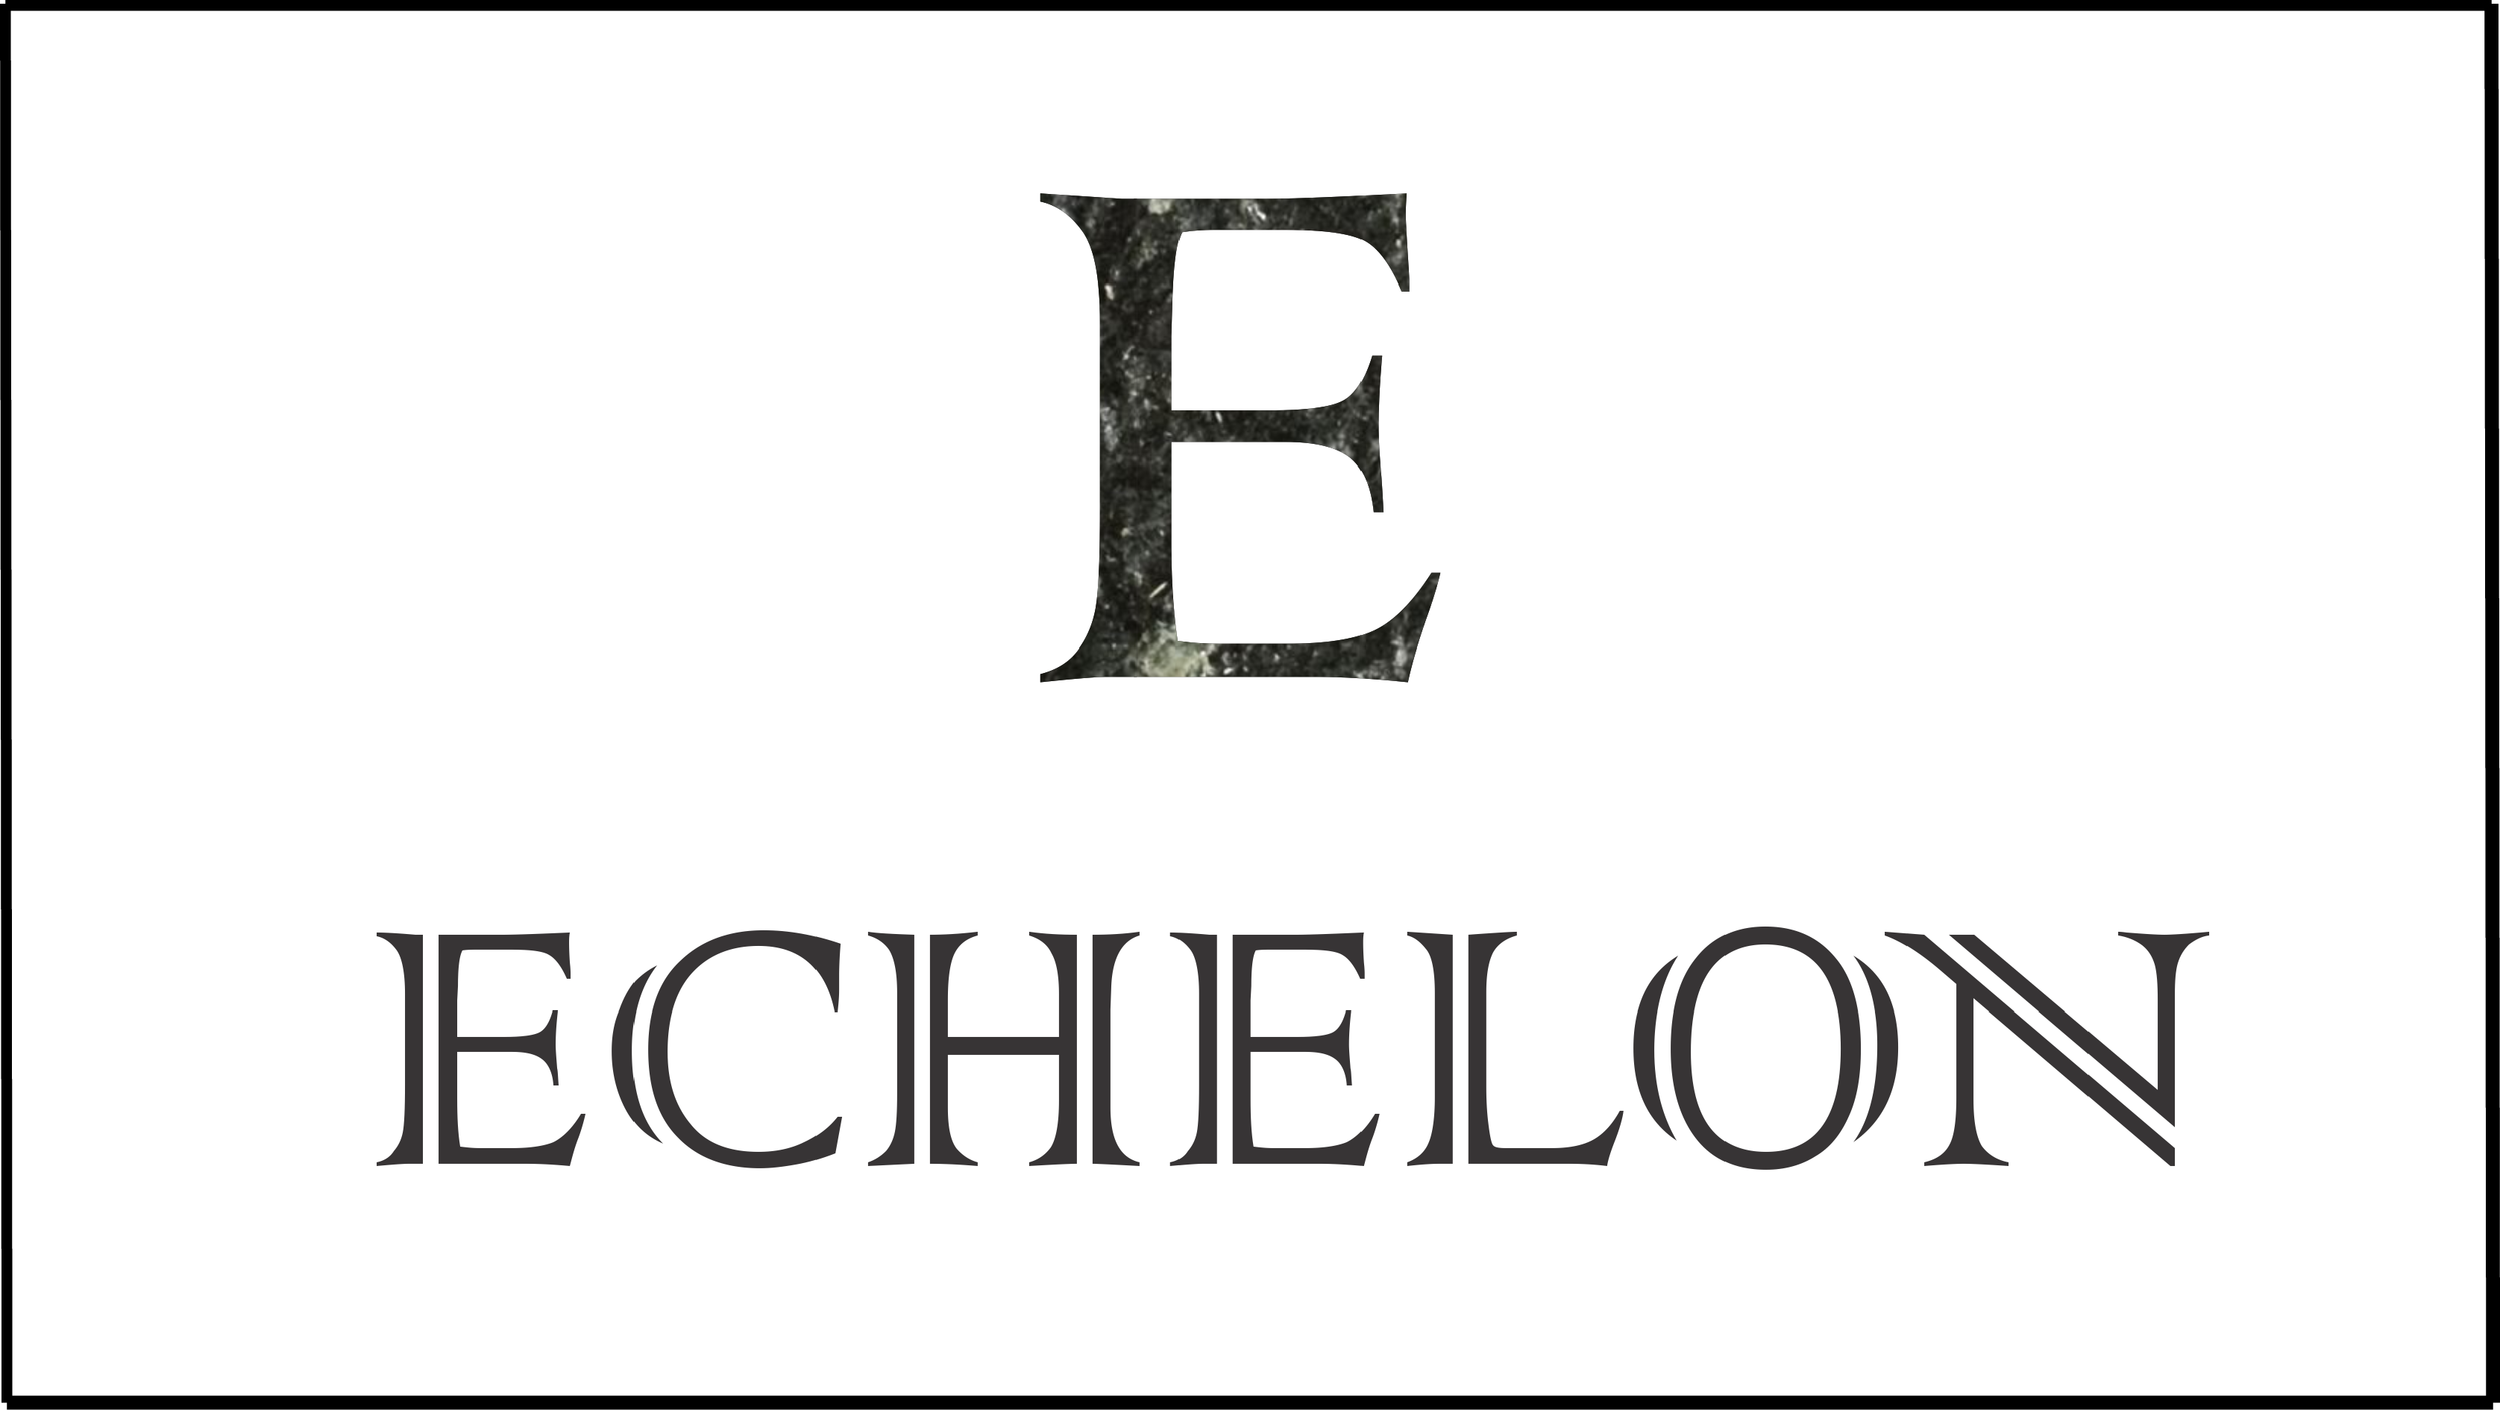 Echelon.png